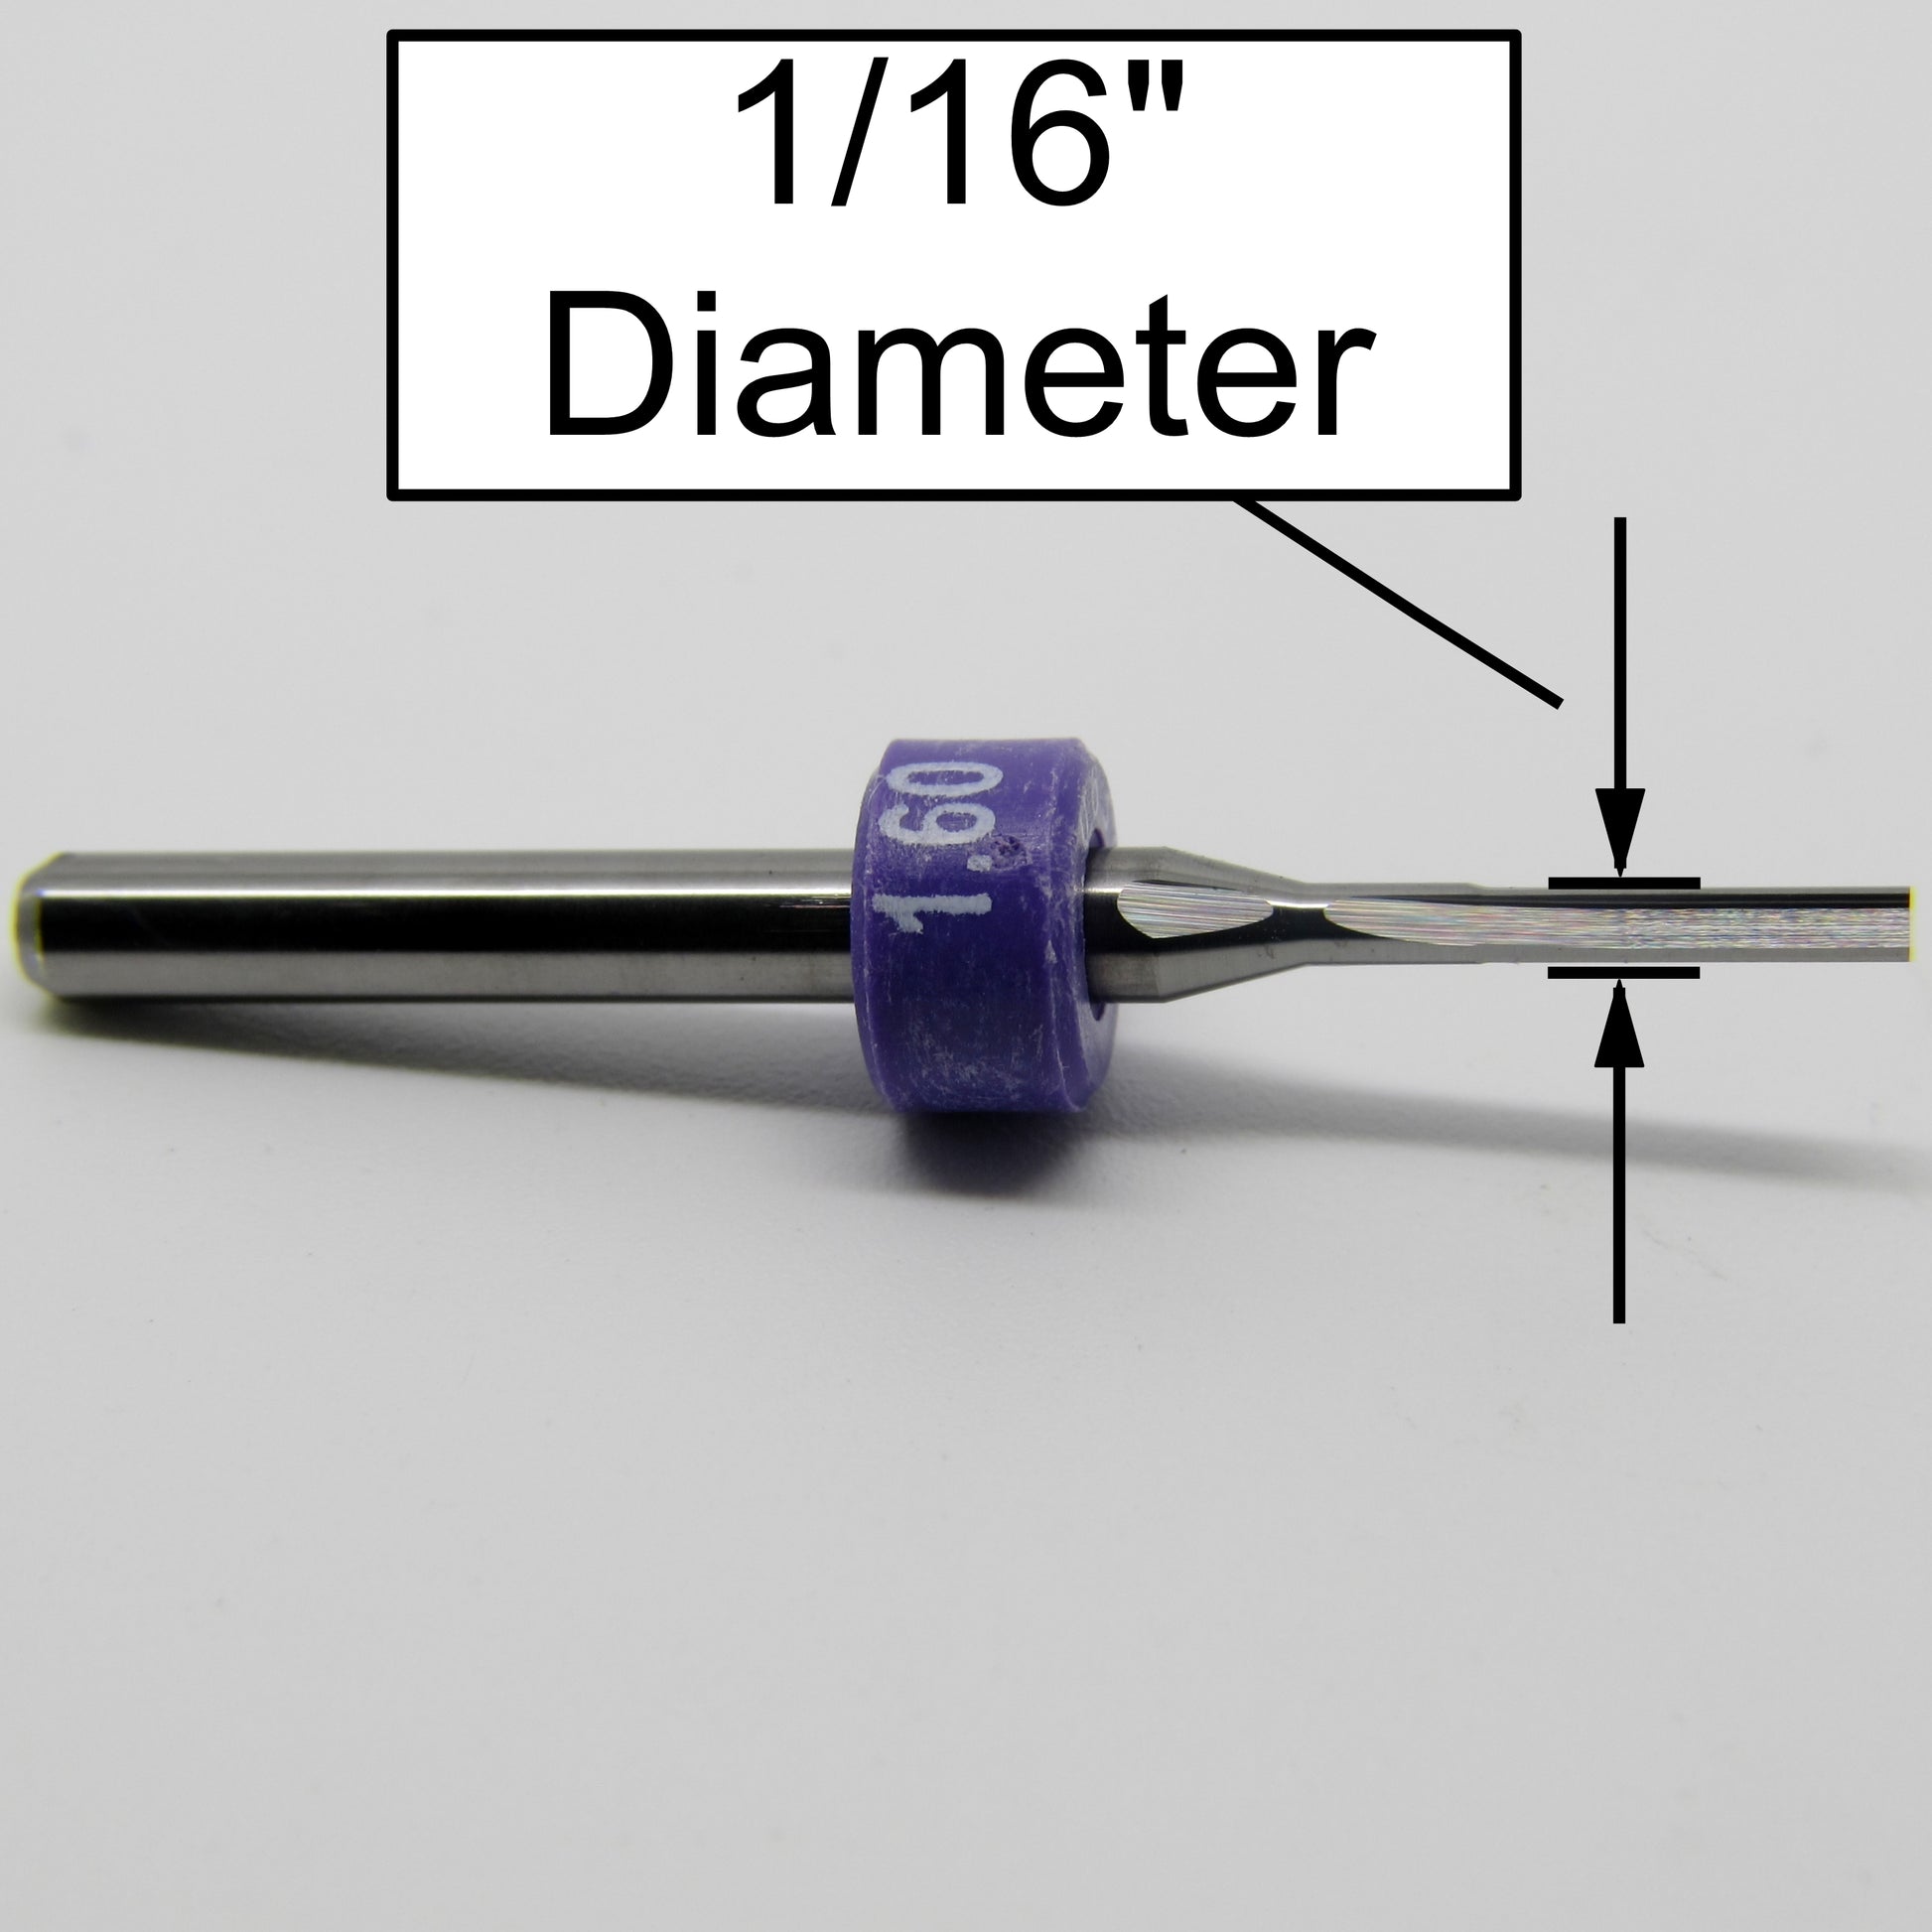 1/16" Diameter 0 Degree Helix - Three Straight Flutes - Soft Laminate and Fine Metal Edge End Mill M180